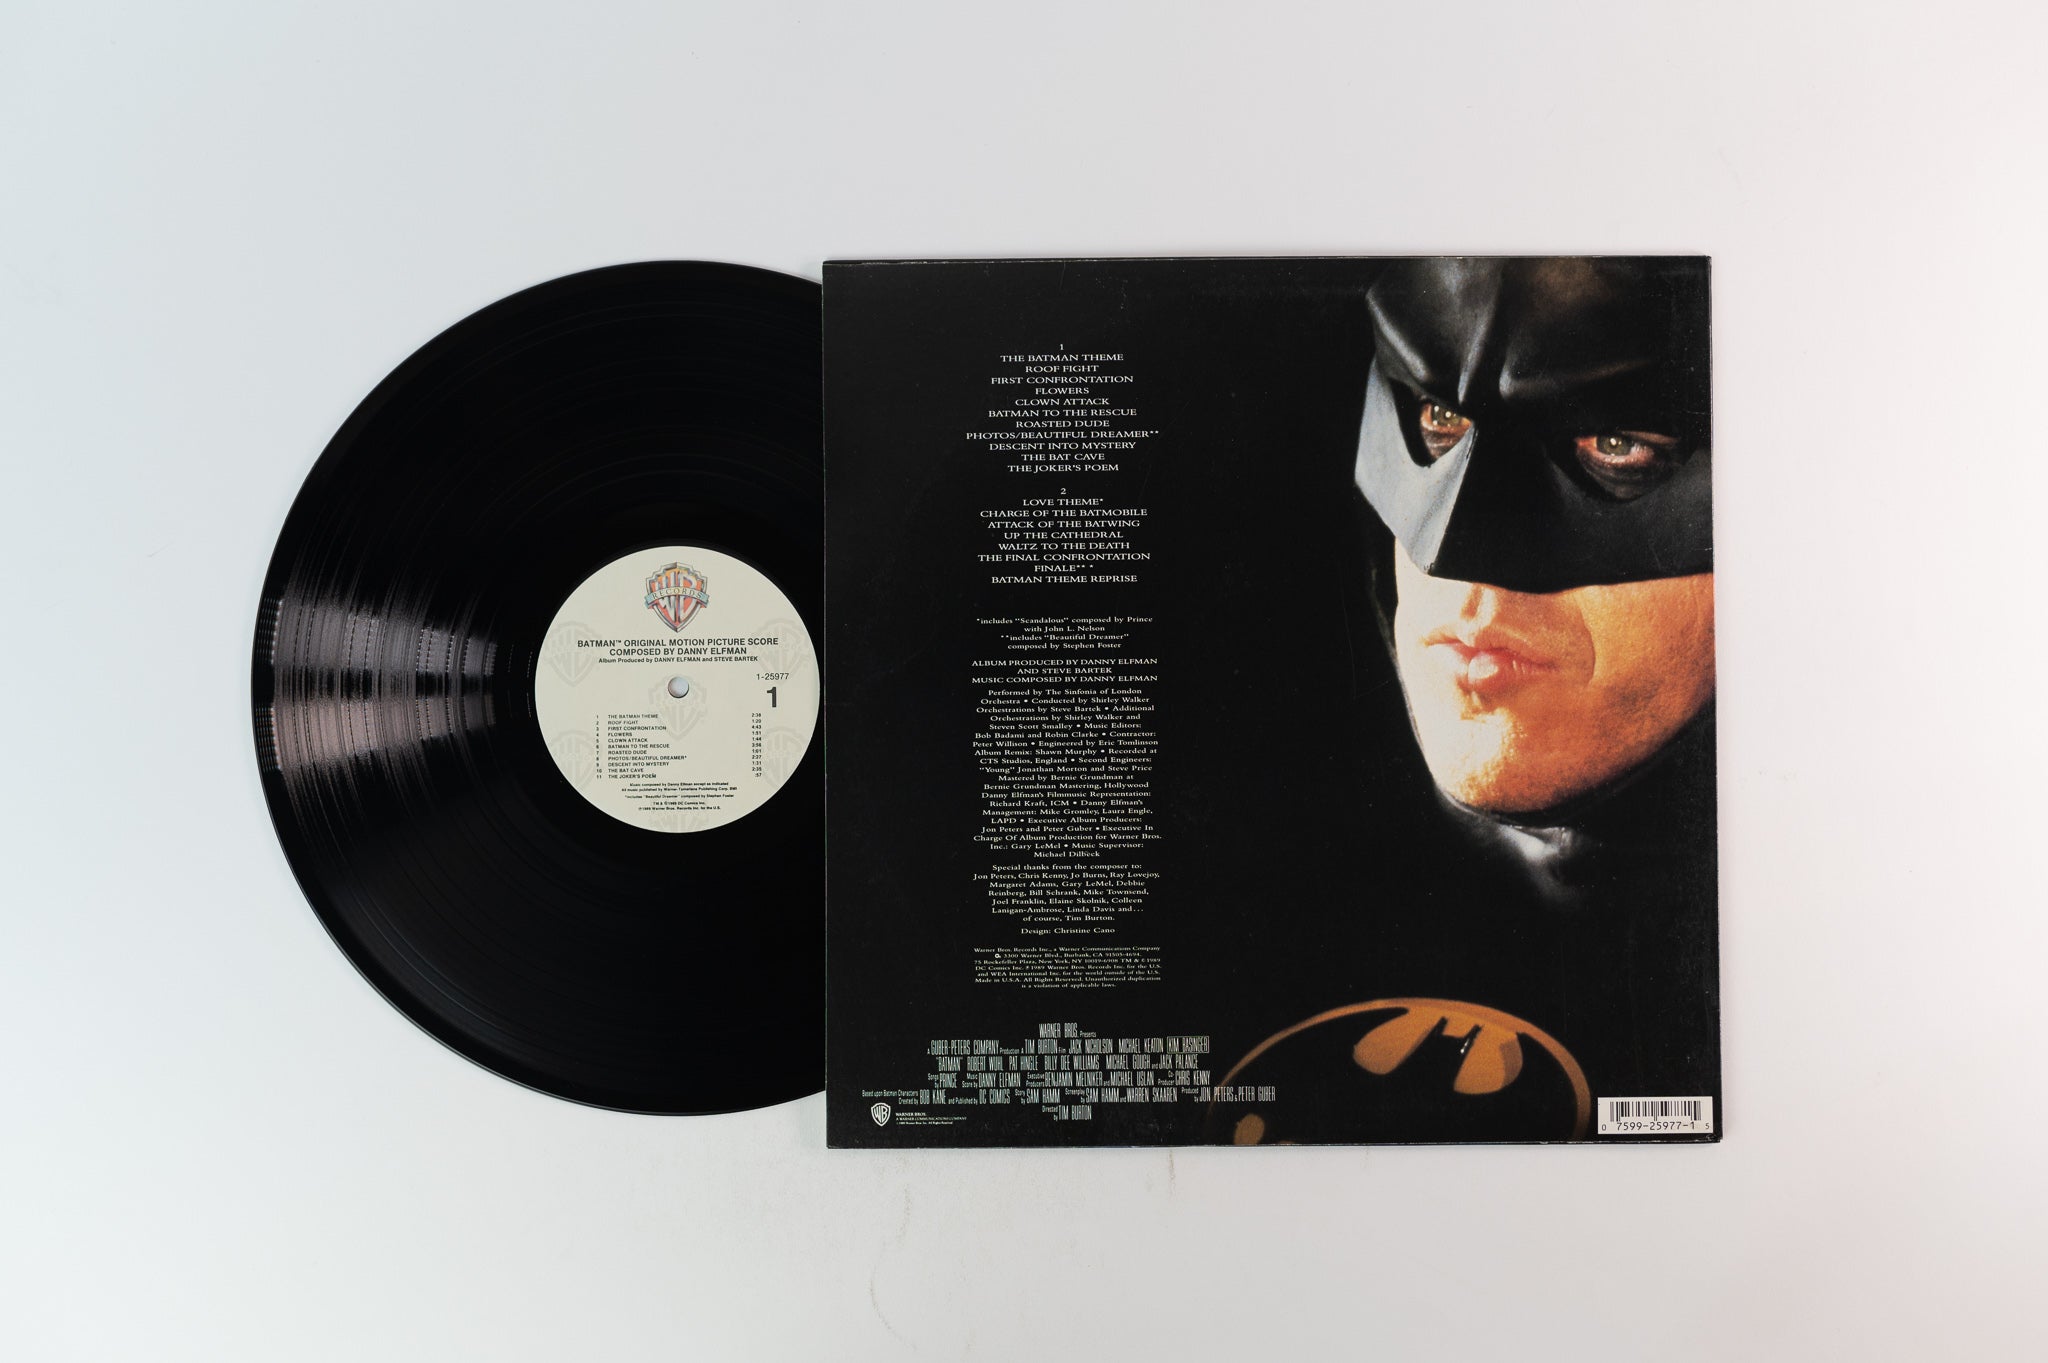 Danny Elfman - Batman (Original Motion Picture Score) on Warner Bros